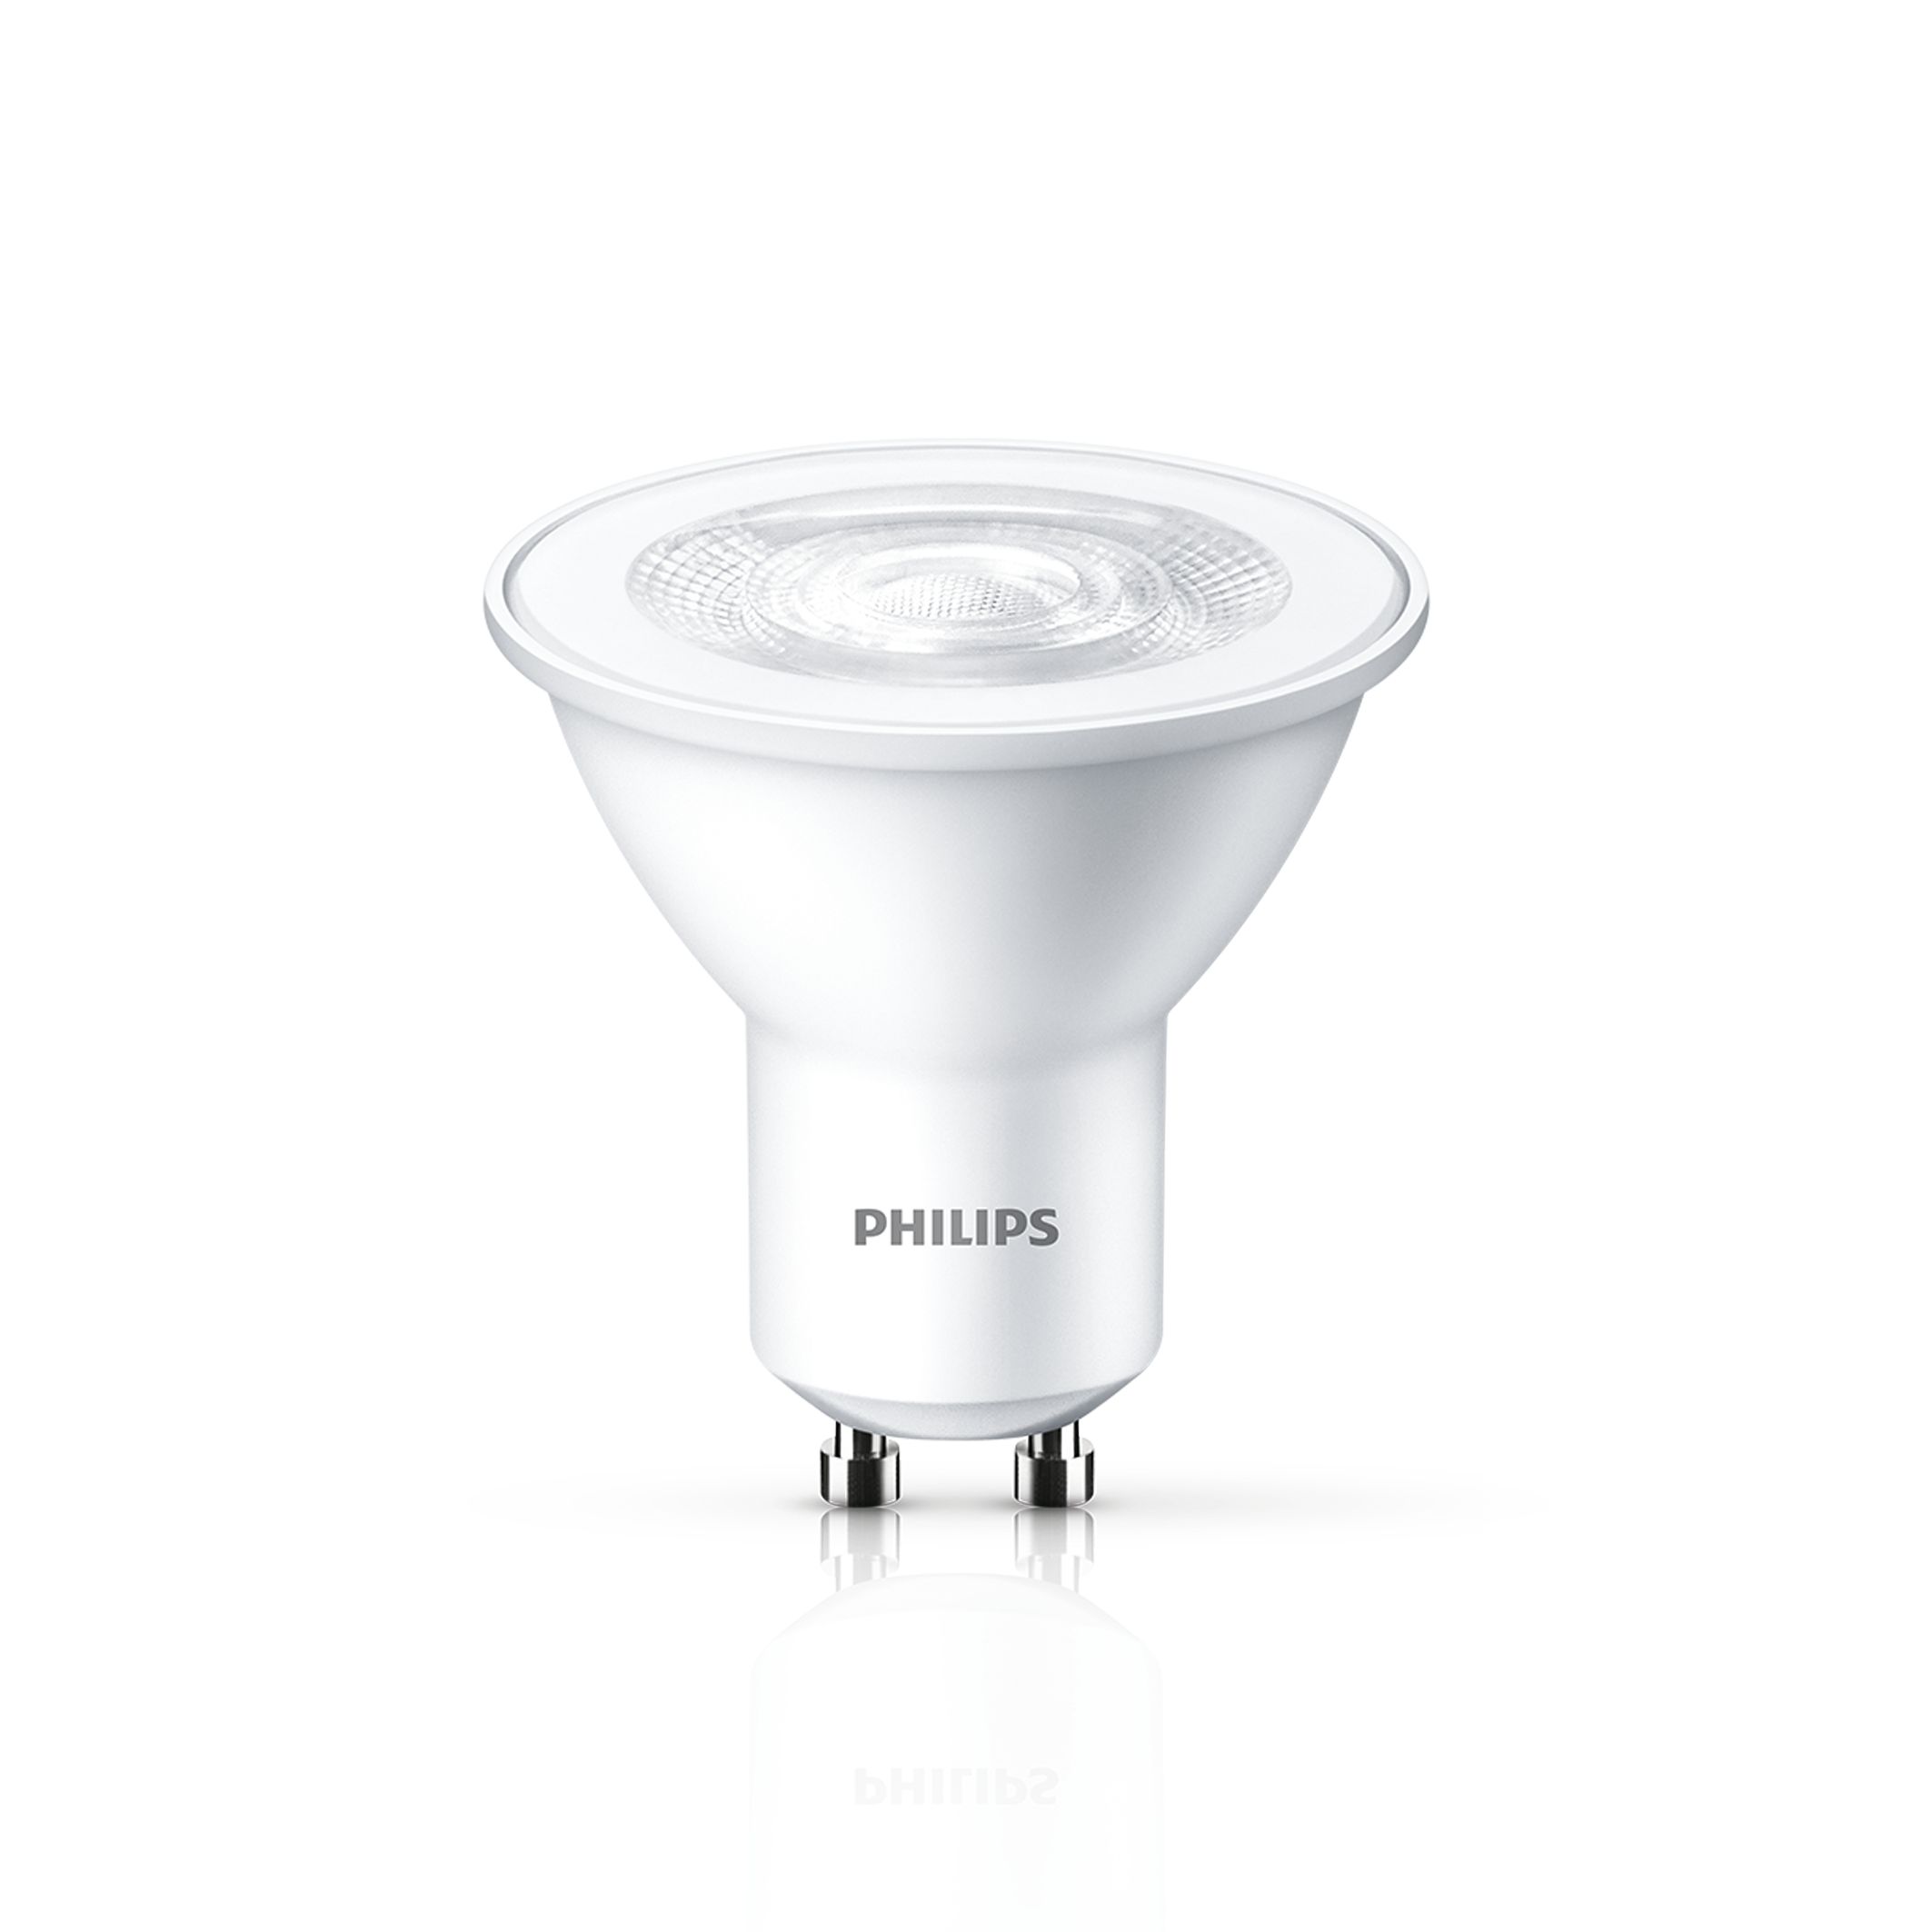 Ampoule GU10 LED Philips - 35 W - Deliled